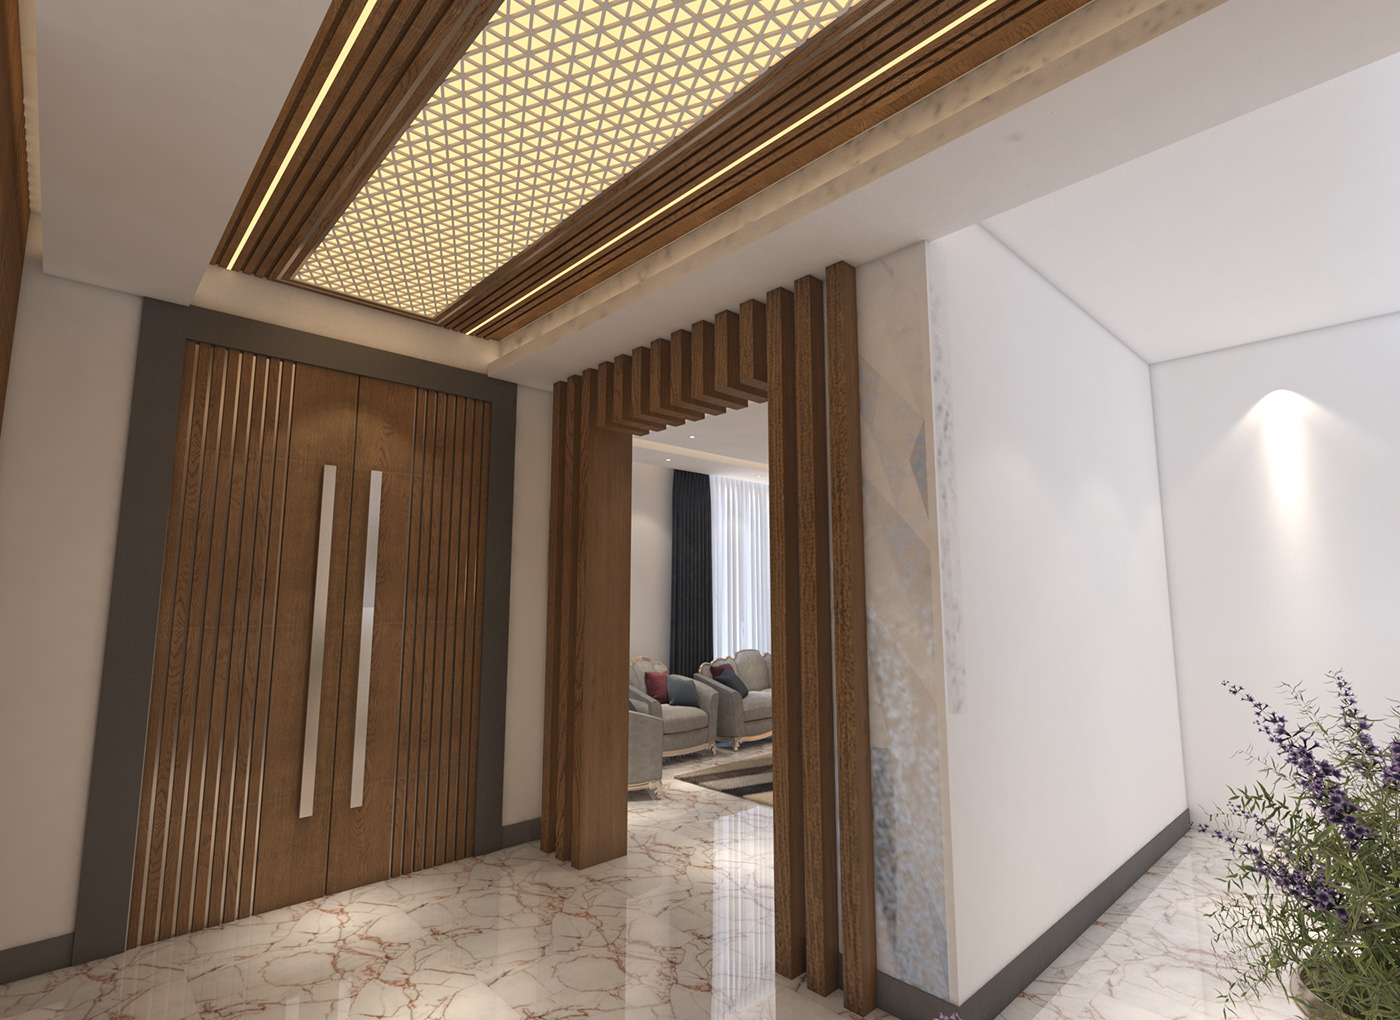 Saudi Arabia riyadh تصميم interior design  visualization vray 3ds max modern Fashion  Style